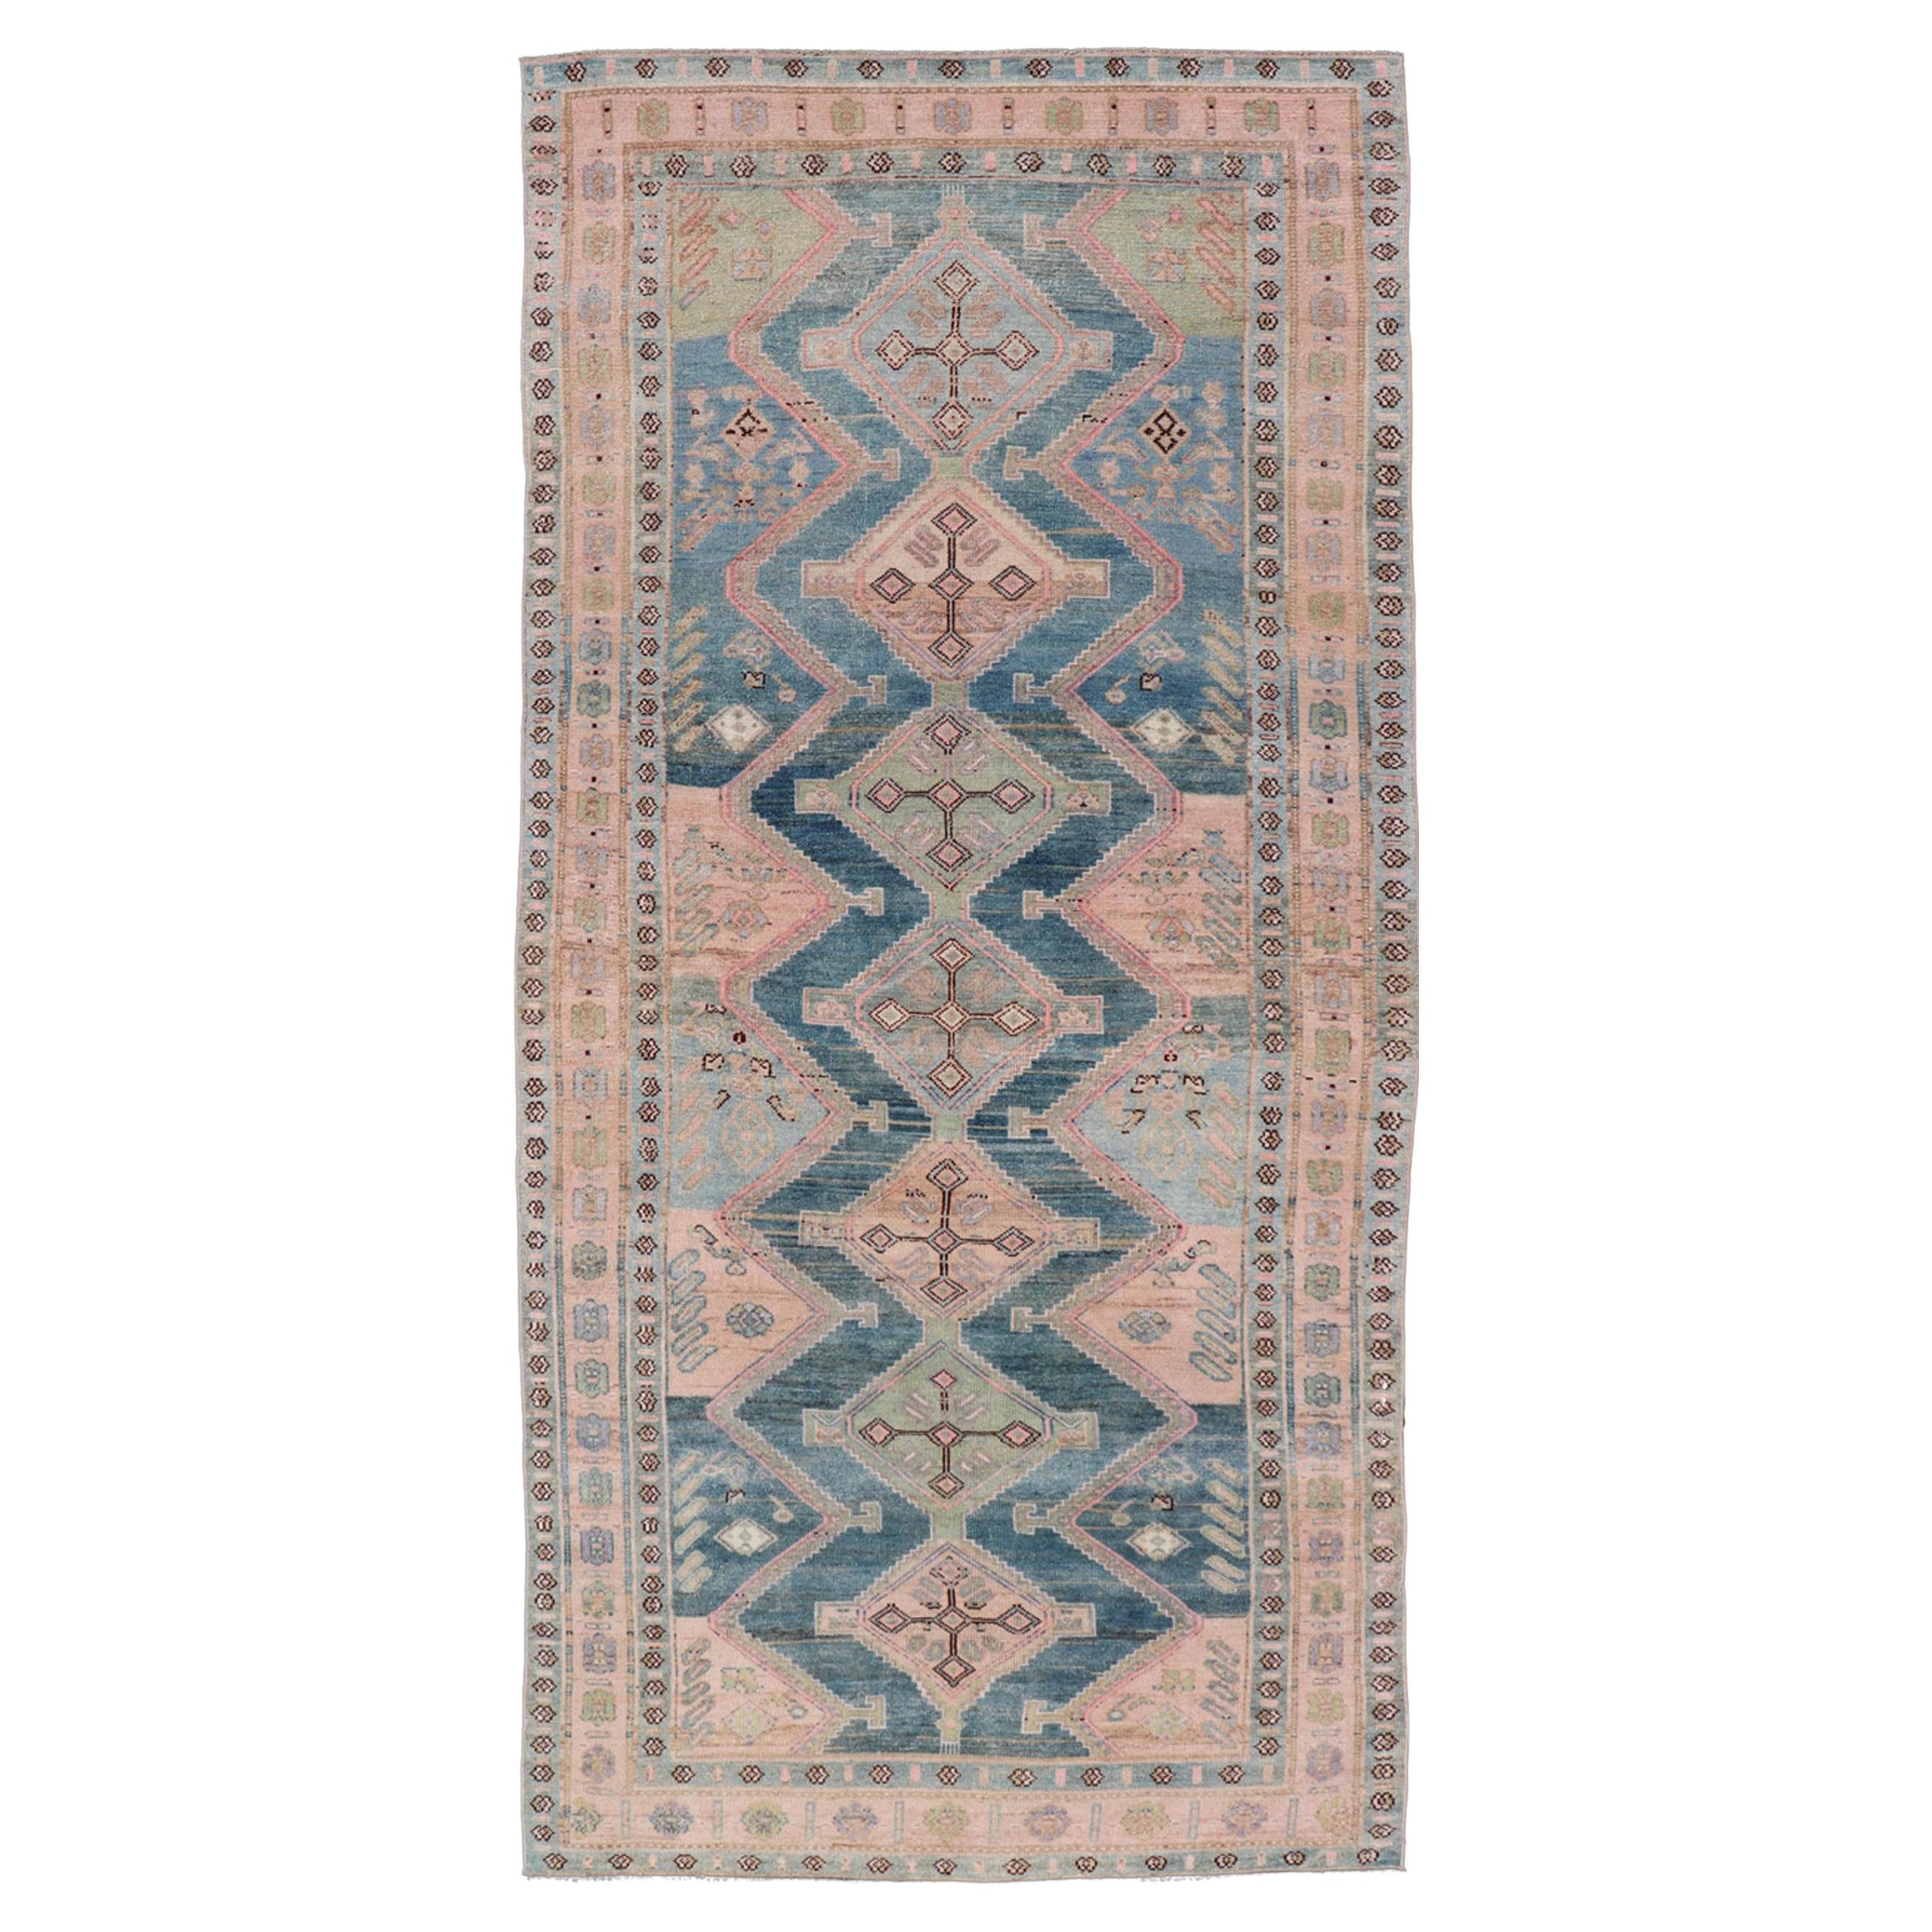 Antique Presian Gallery Kurdish Rug in Wool with Sub-Geometric Design